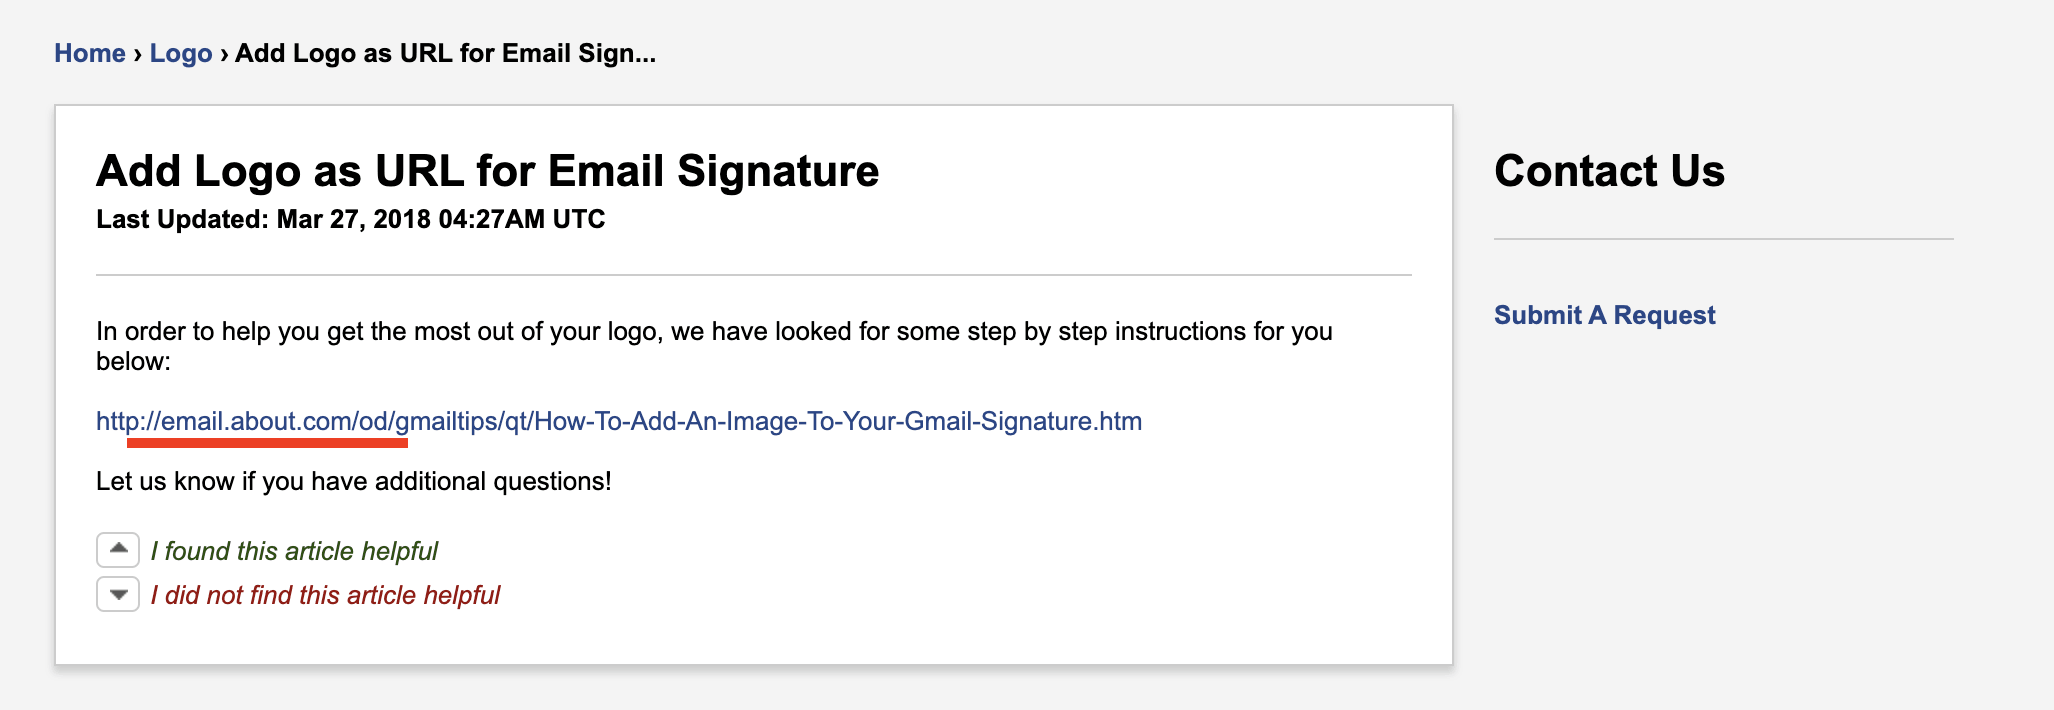 FreeLogoServices screenshot - Email signature FAQ